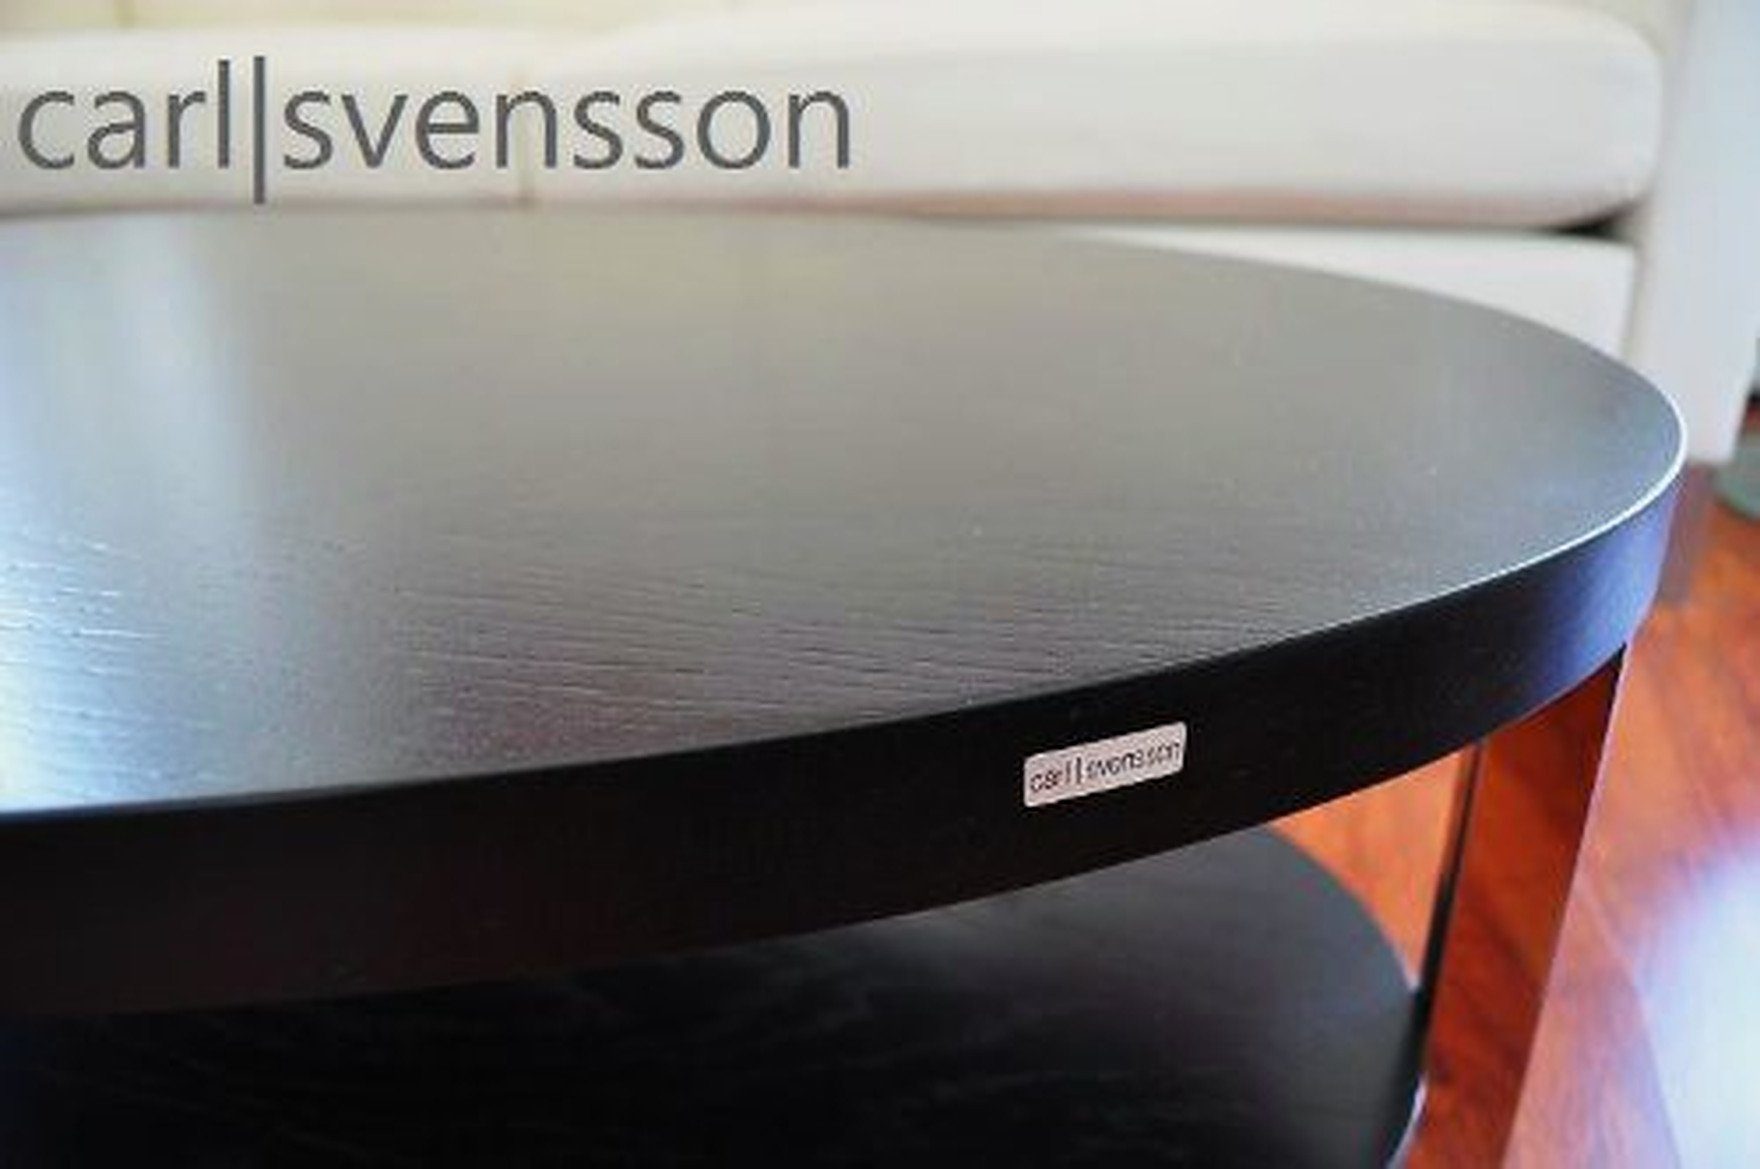 Schwarz 118x60x33,5cm Design Carl oval svensson carl O-111 Couchtisch Couchtisch Svensson Tisch